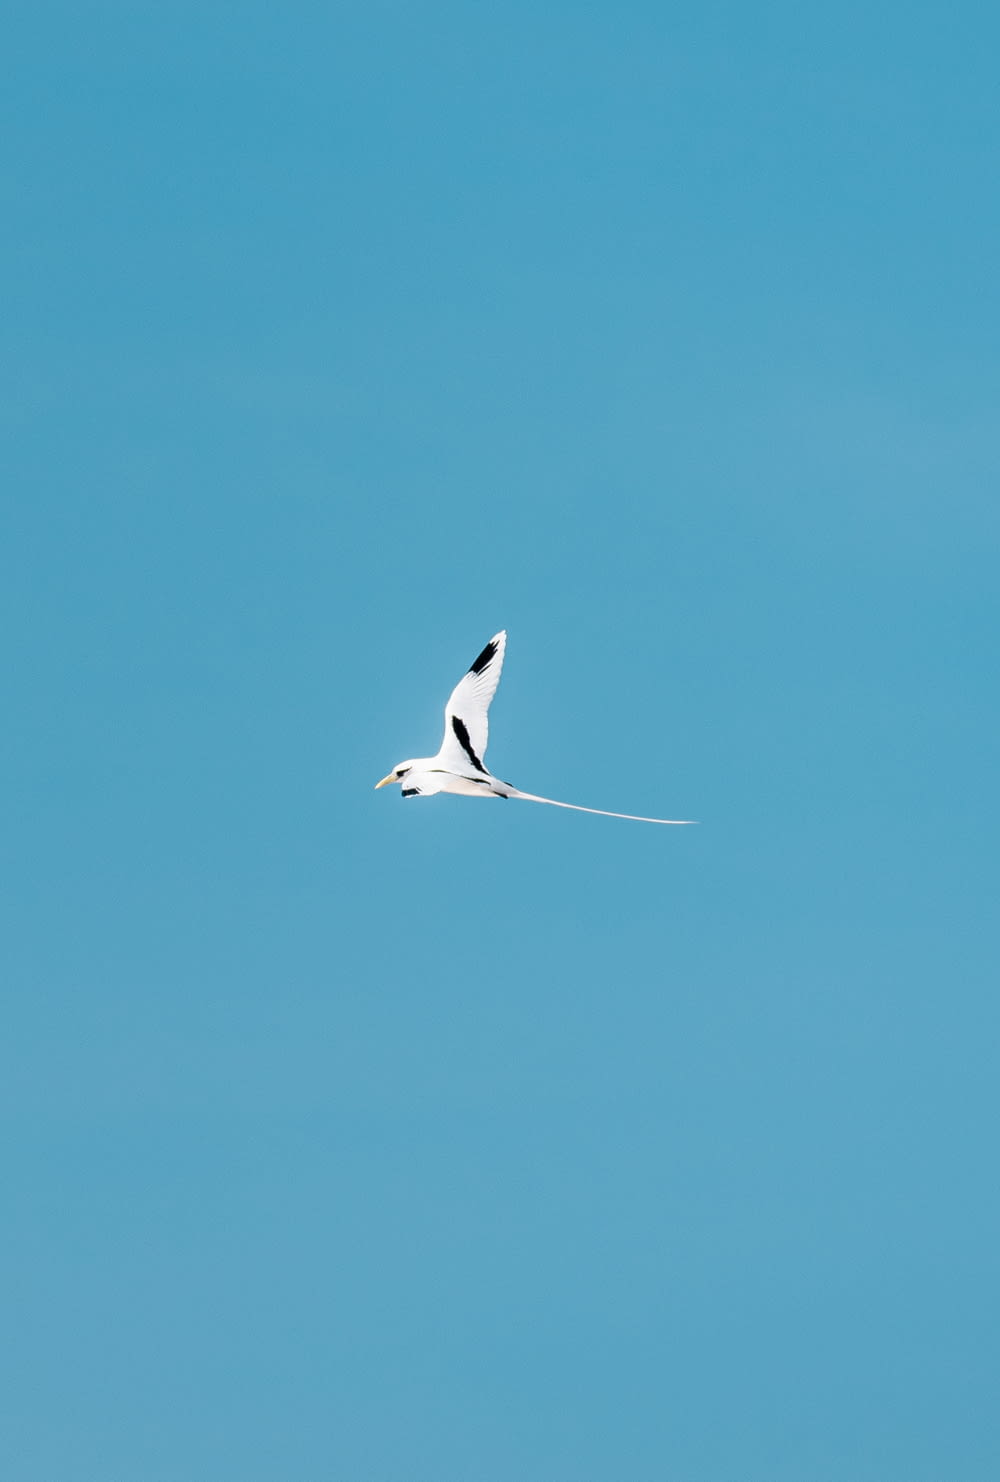 white and black bird flying under blue sky during daytime